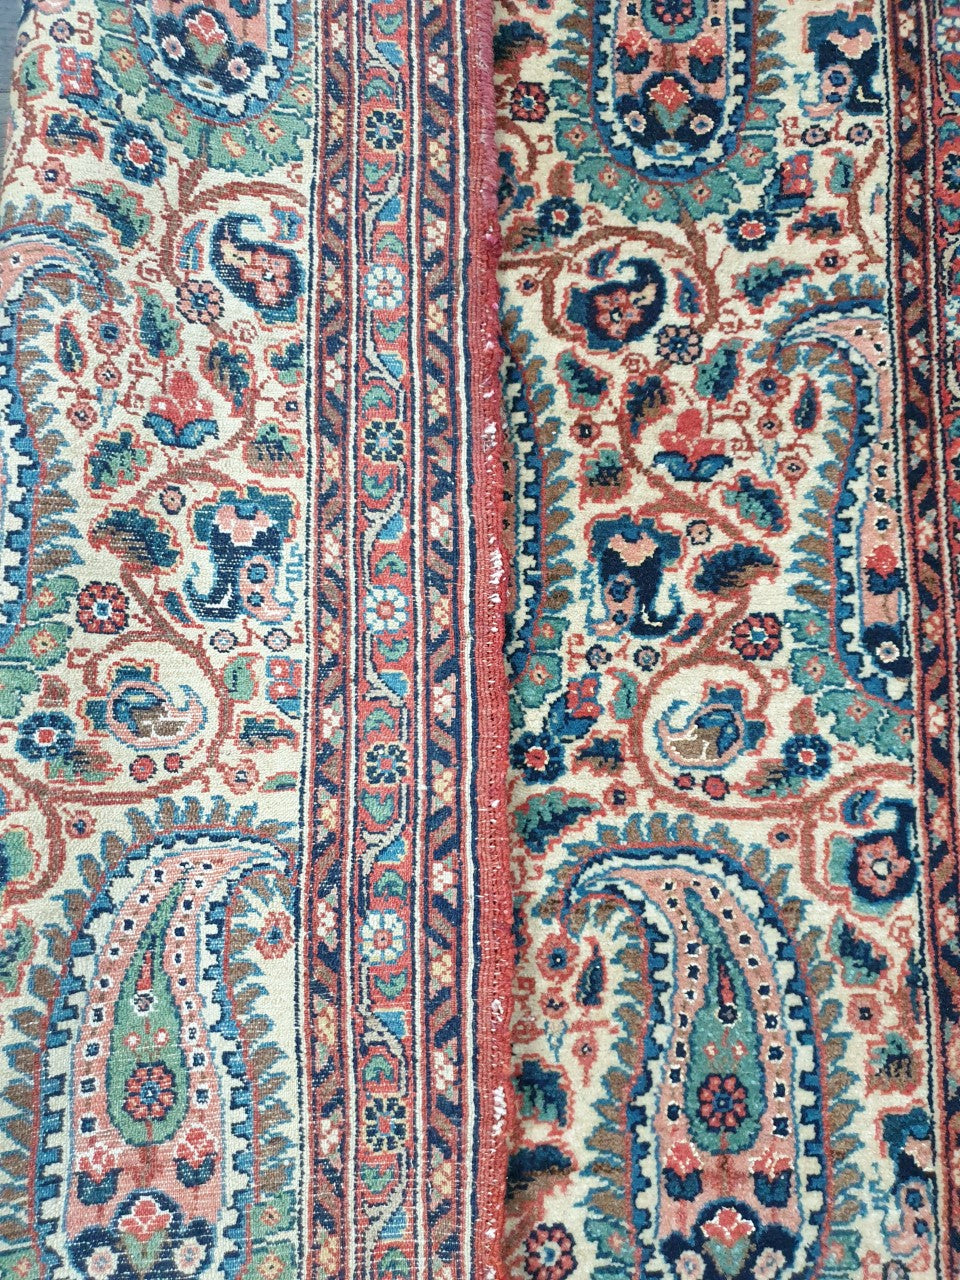 Wonderful Old Antique Senneh rug